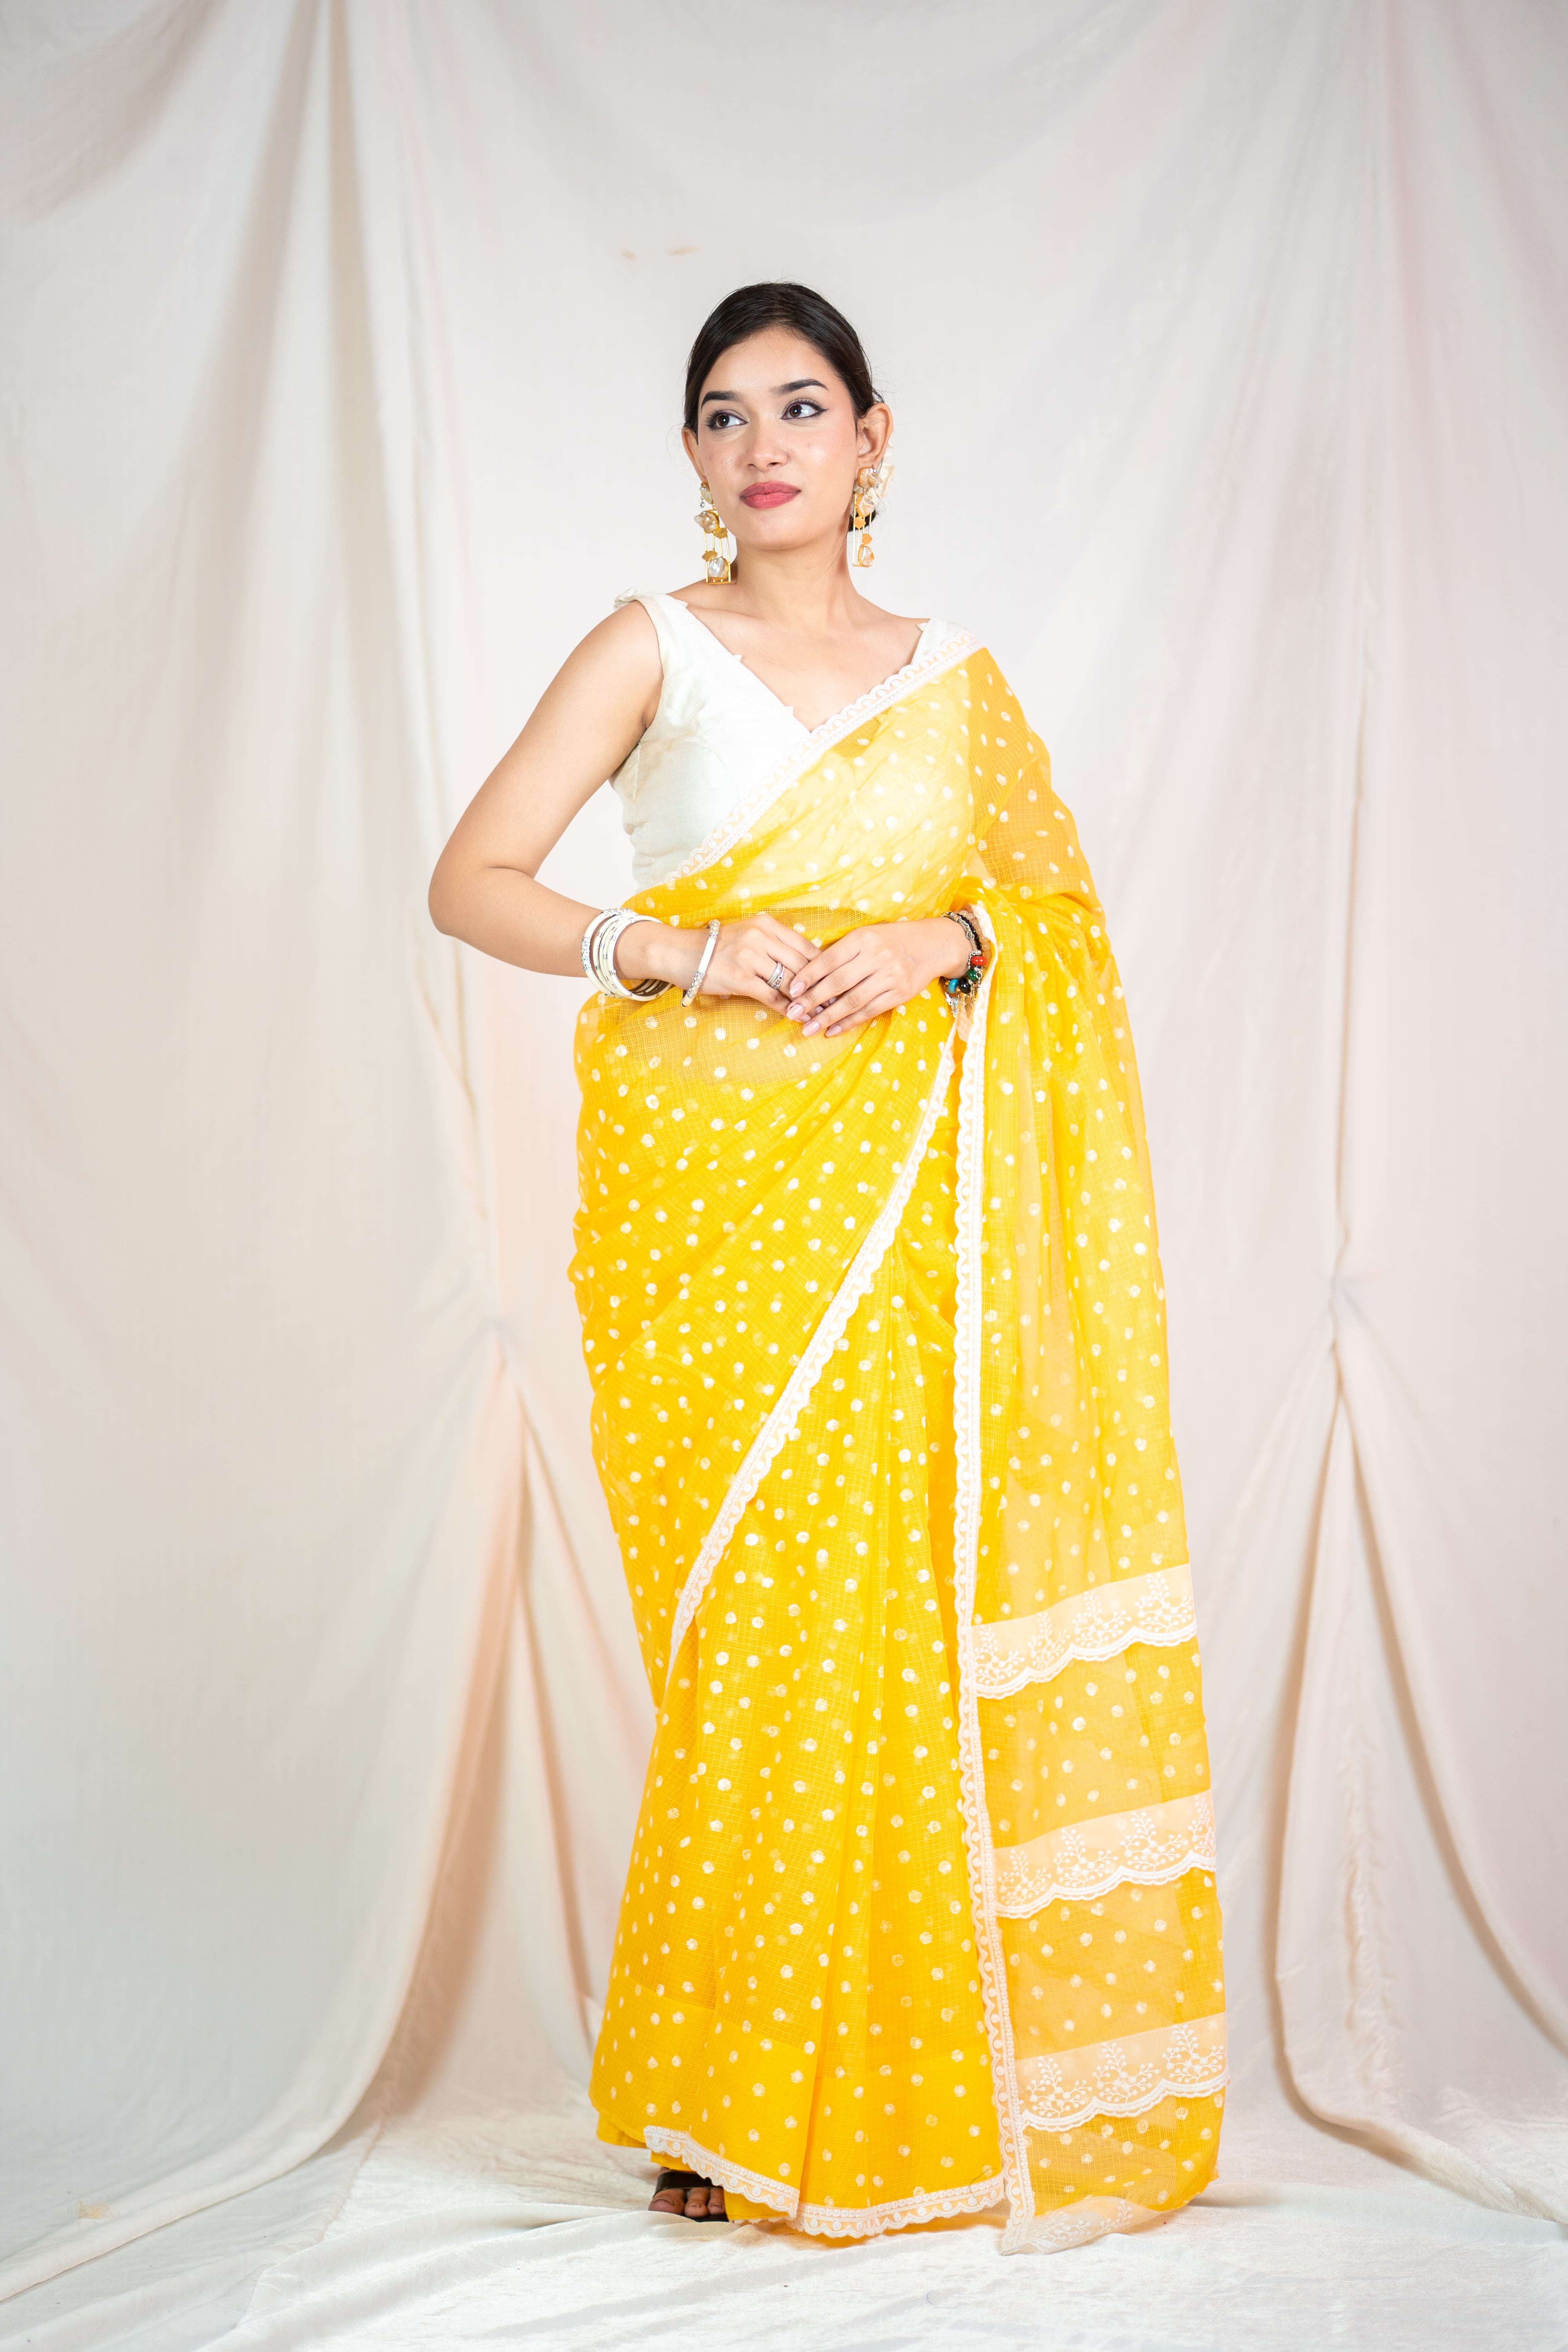 Yellow Kota Doria saree with white polka dots and lace detailing on edges.